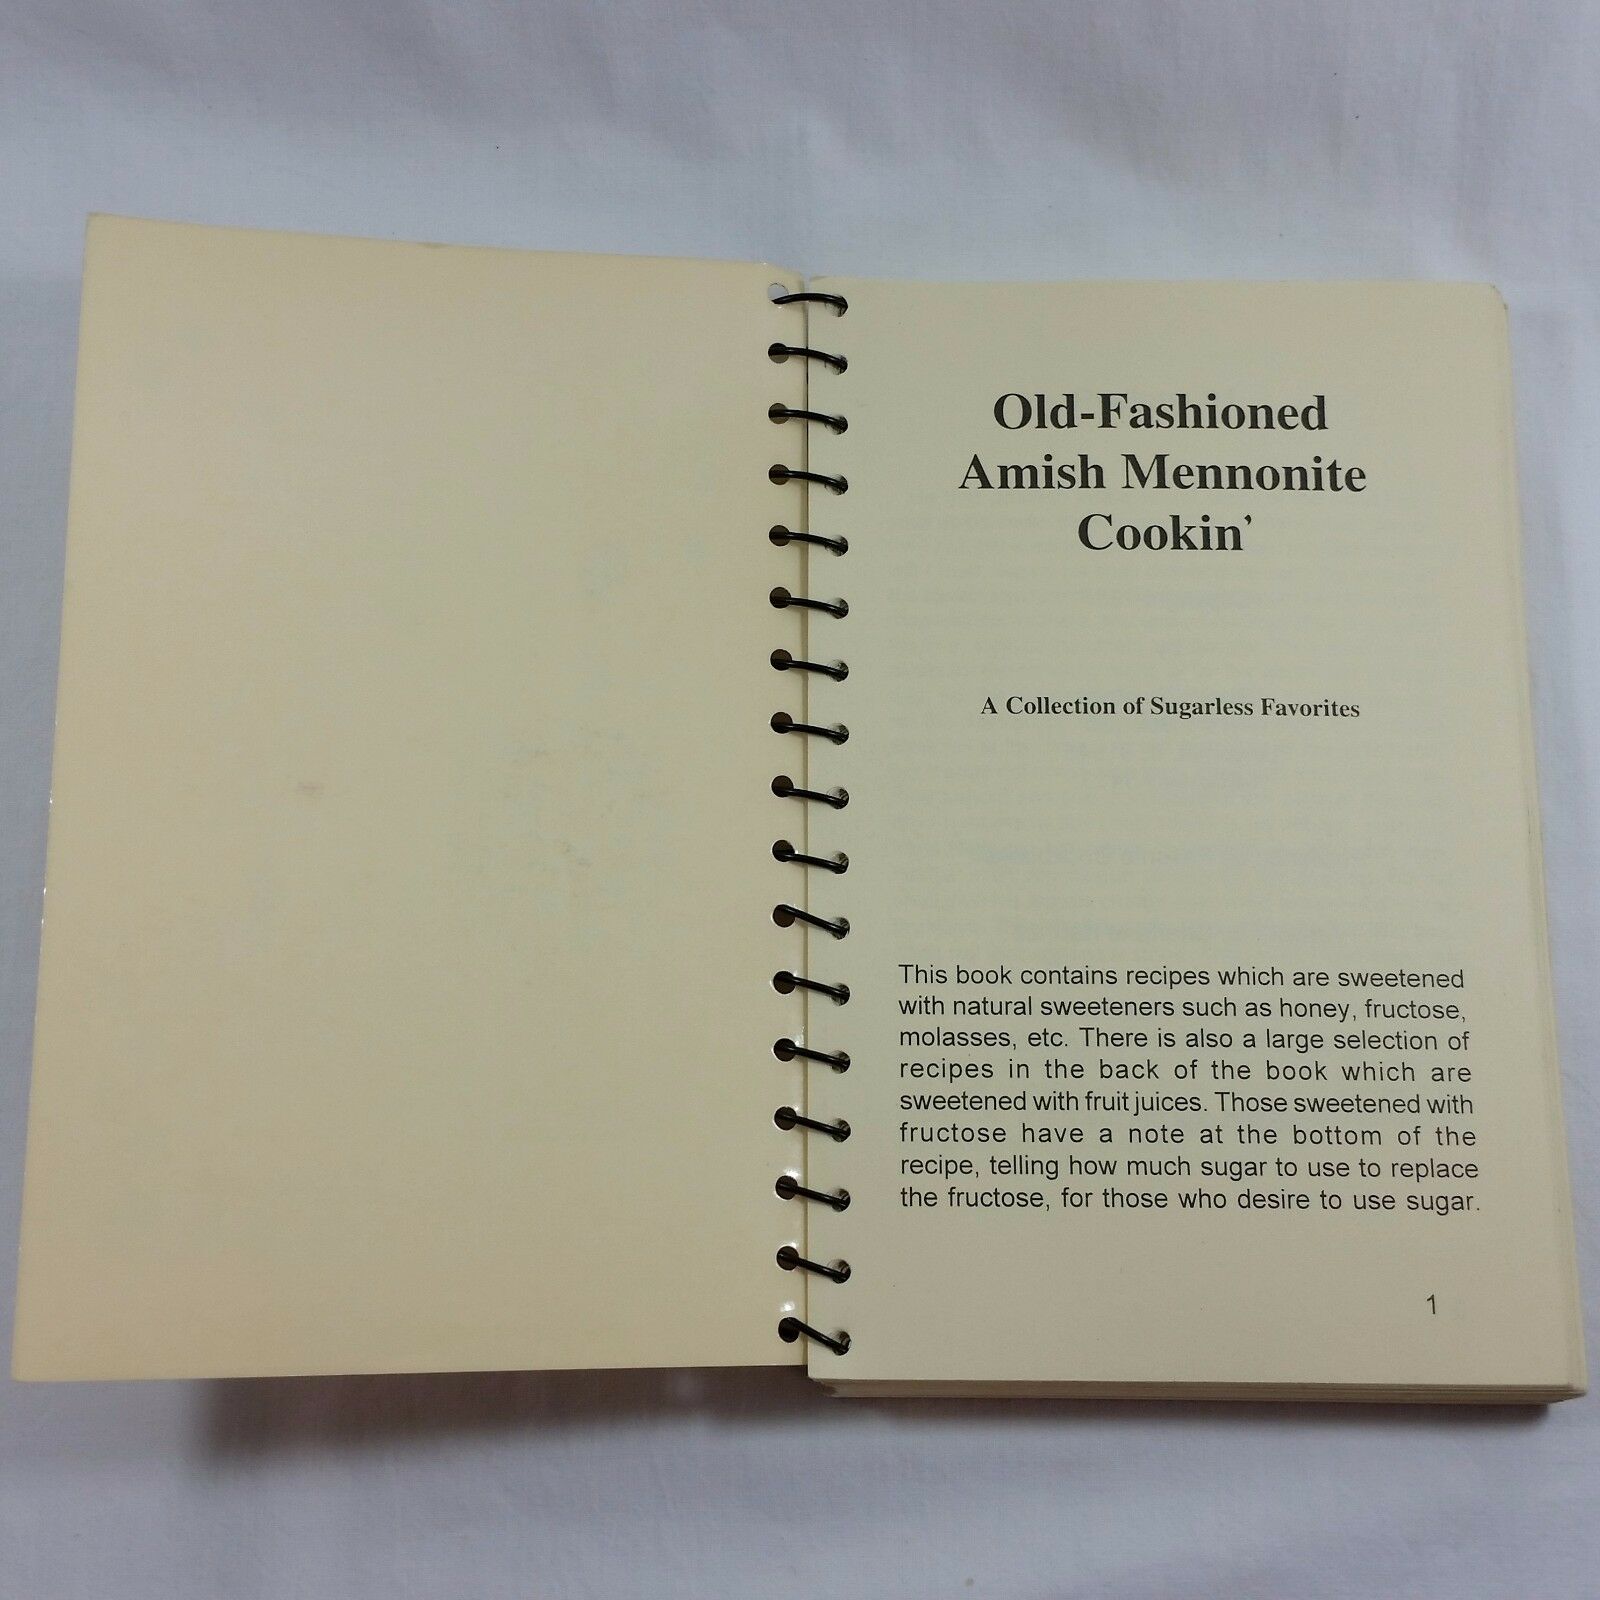 Vintage Sugarless Sugar Free Cookbook Old Fashioned Amish Mennonite Cookin 1995 - At Grandma's Table